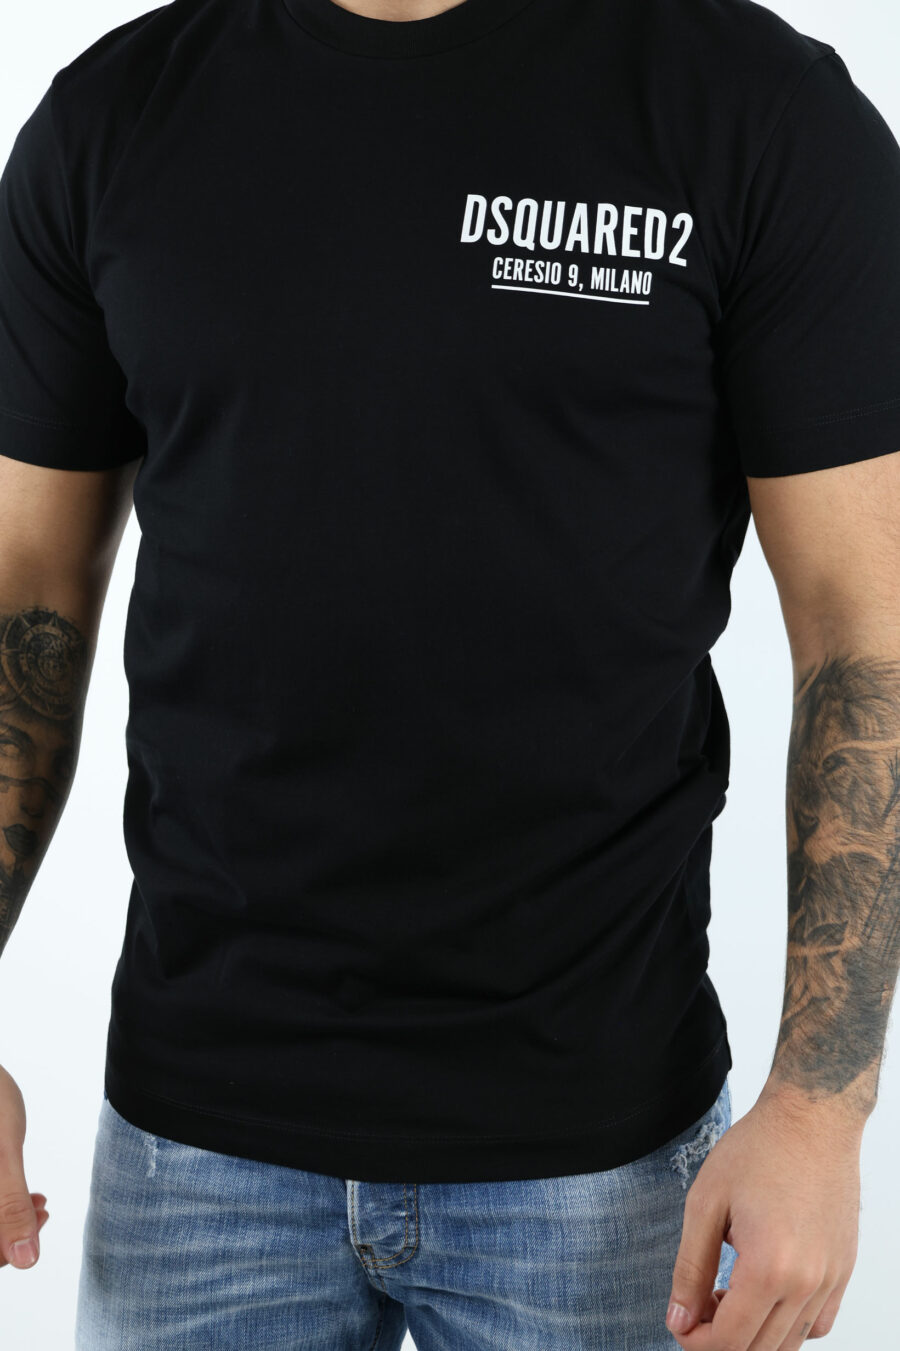 T-shirt preta com minilogo "ceresio 9, milano" - 106878